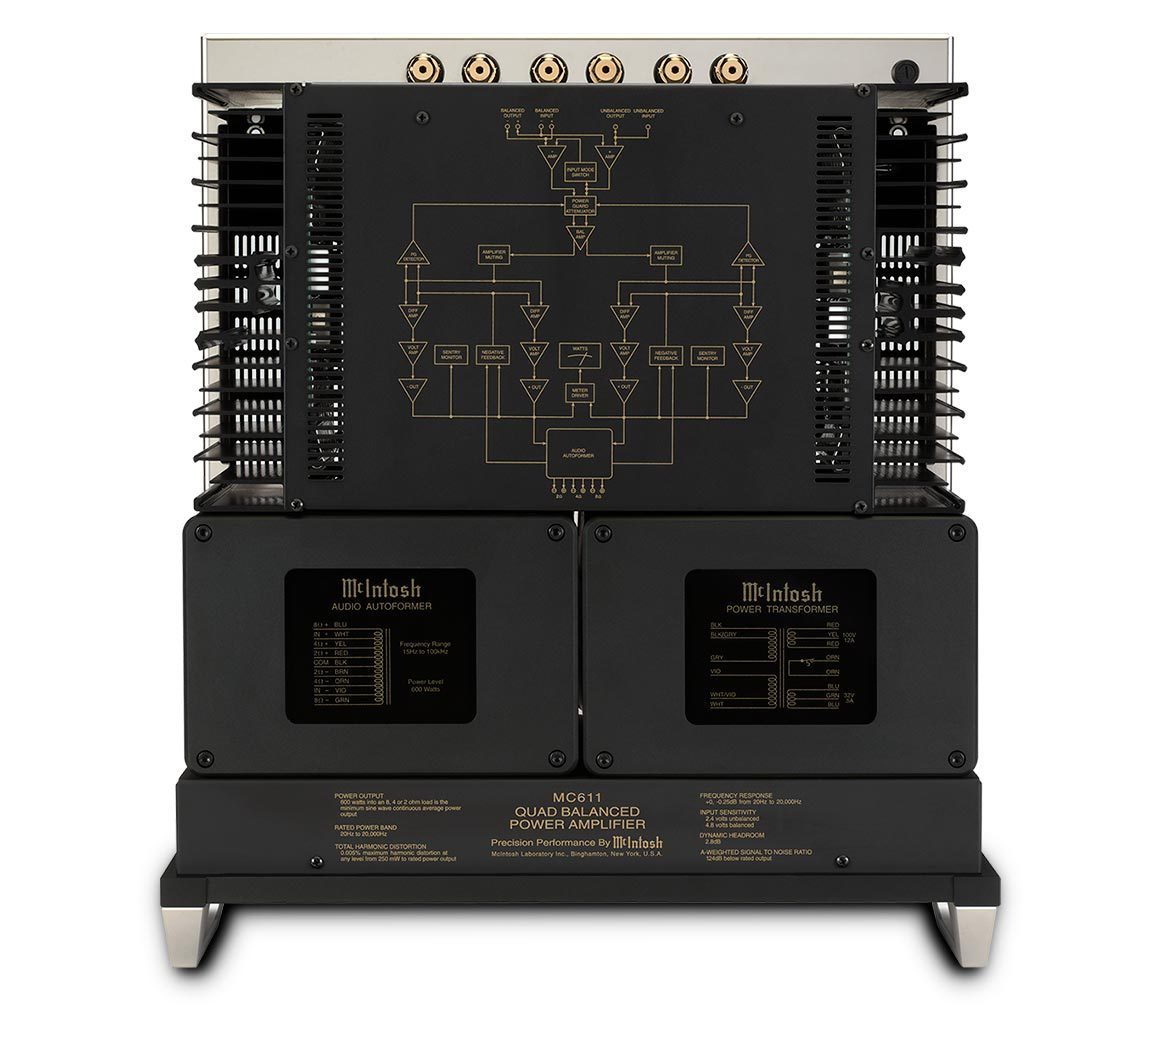 McIntosh MC611 Power amplifier